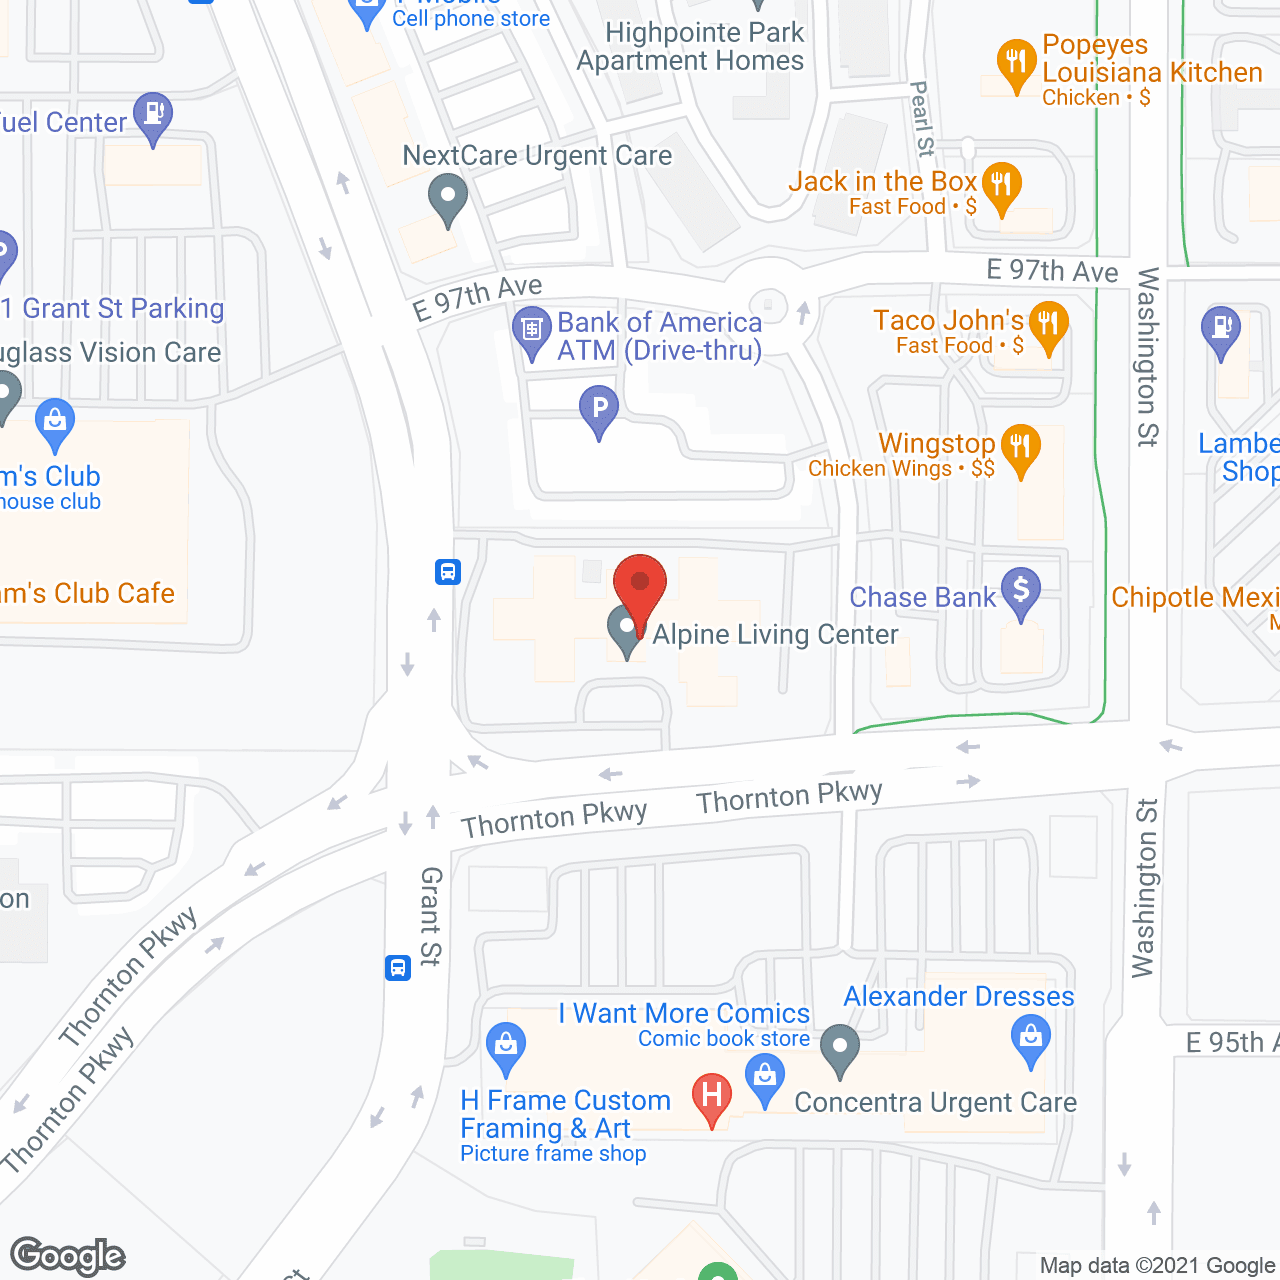 Alpine Living Center/Mariner in google map